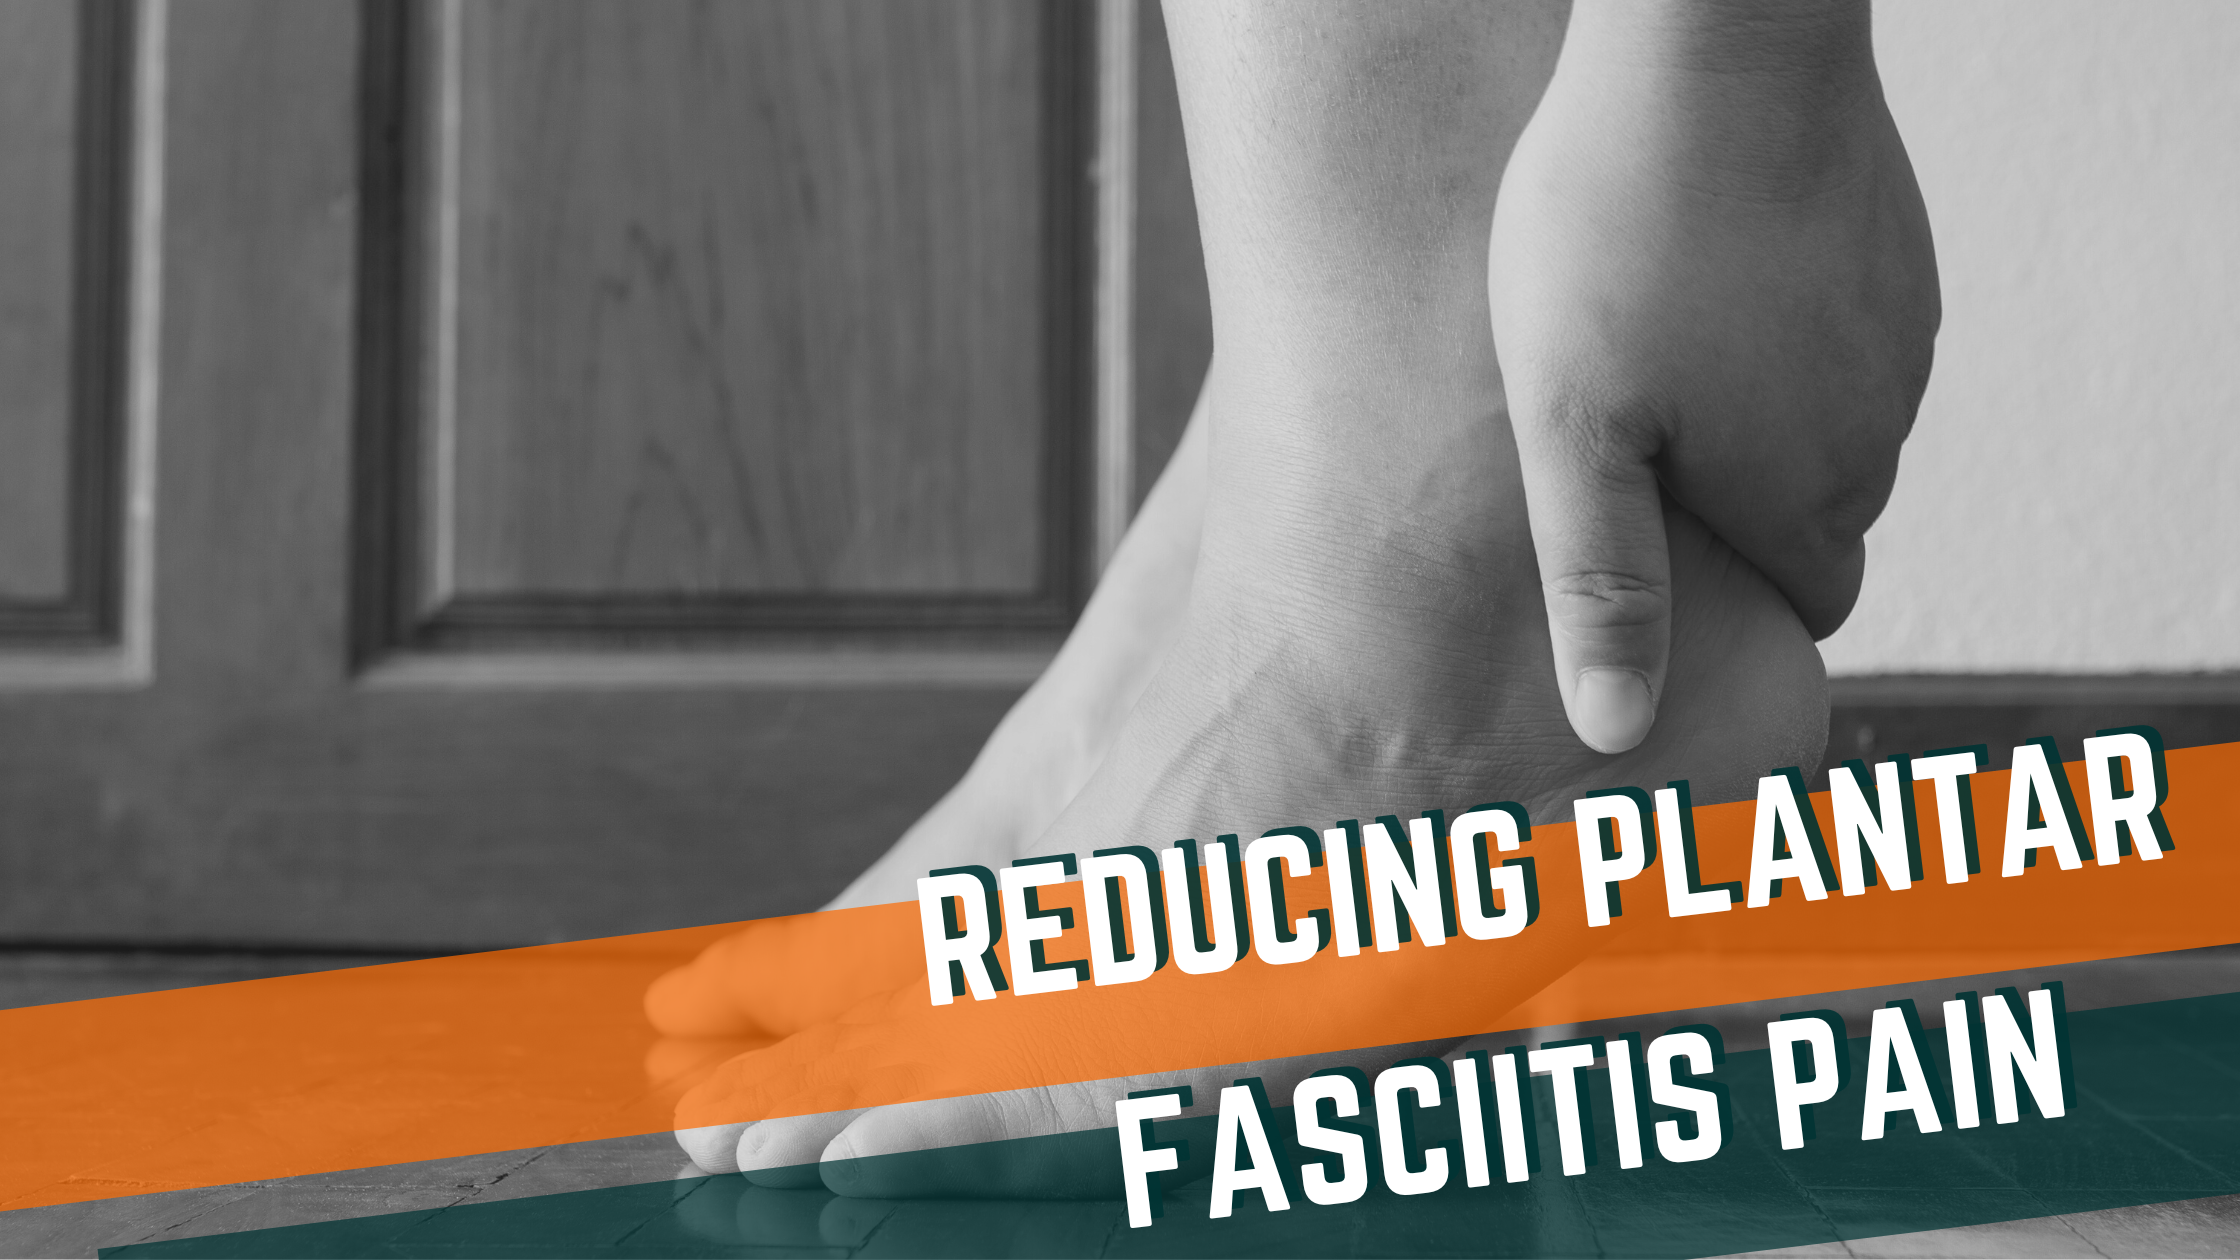 How to Reduce Plantar Fasciitis Pain